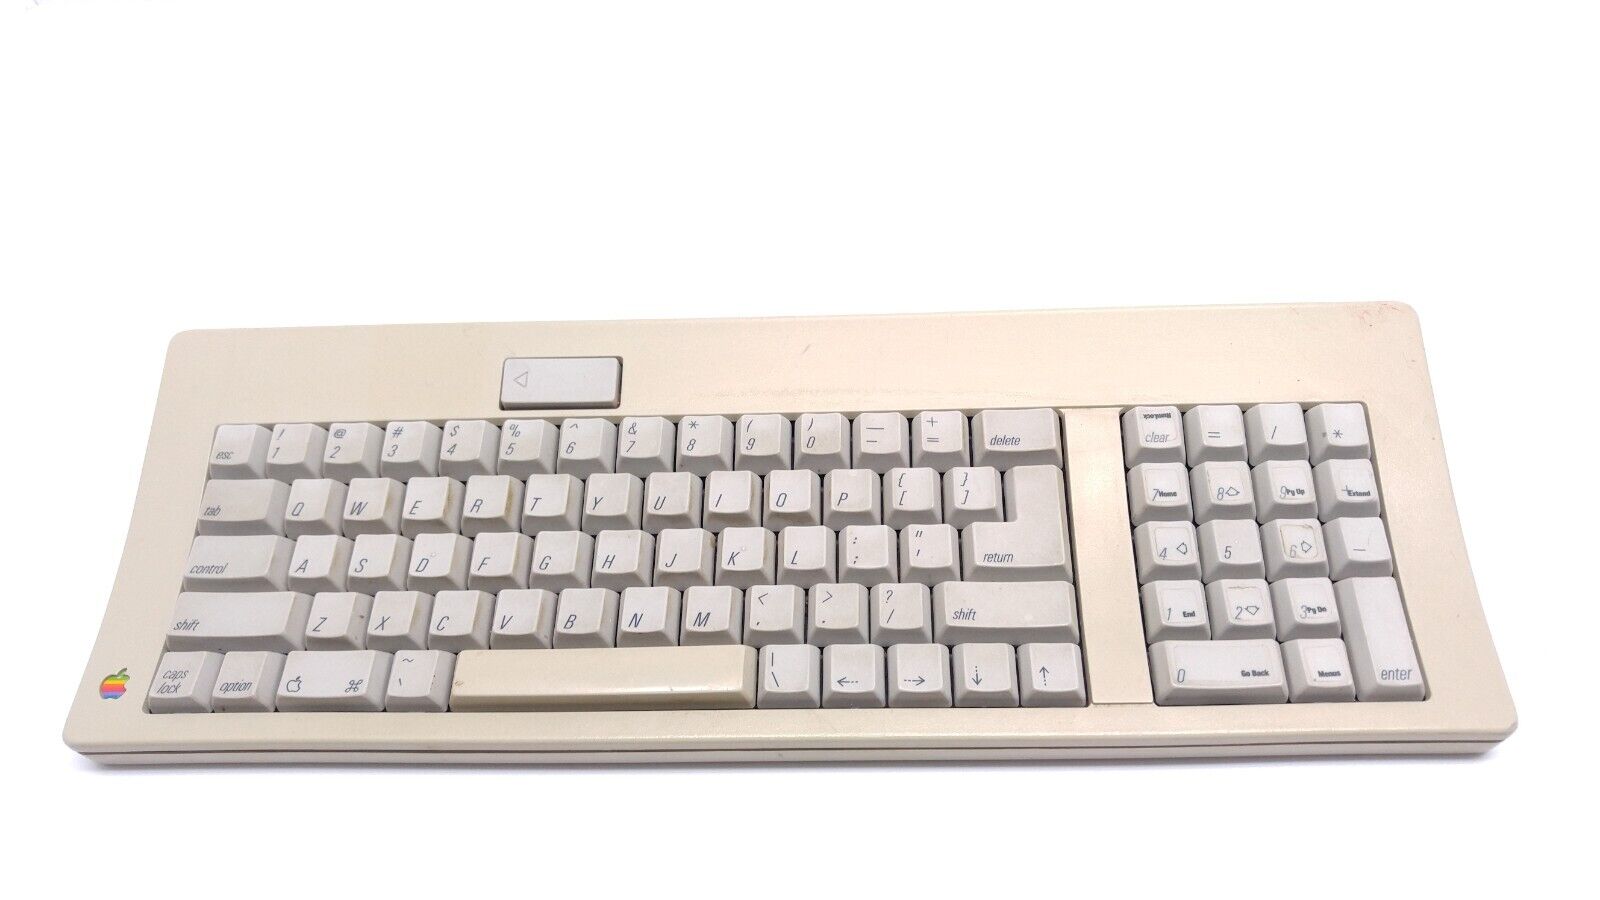 Apple M0116 Keyboard for ADB Macintosh - Vintage Works